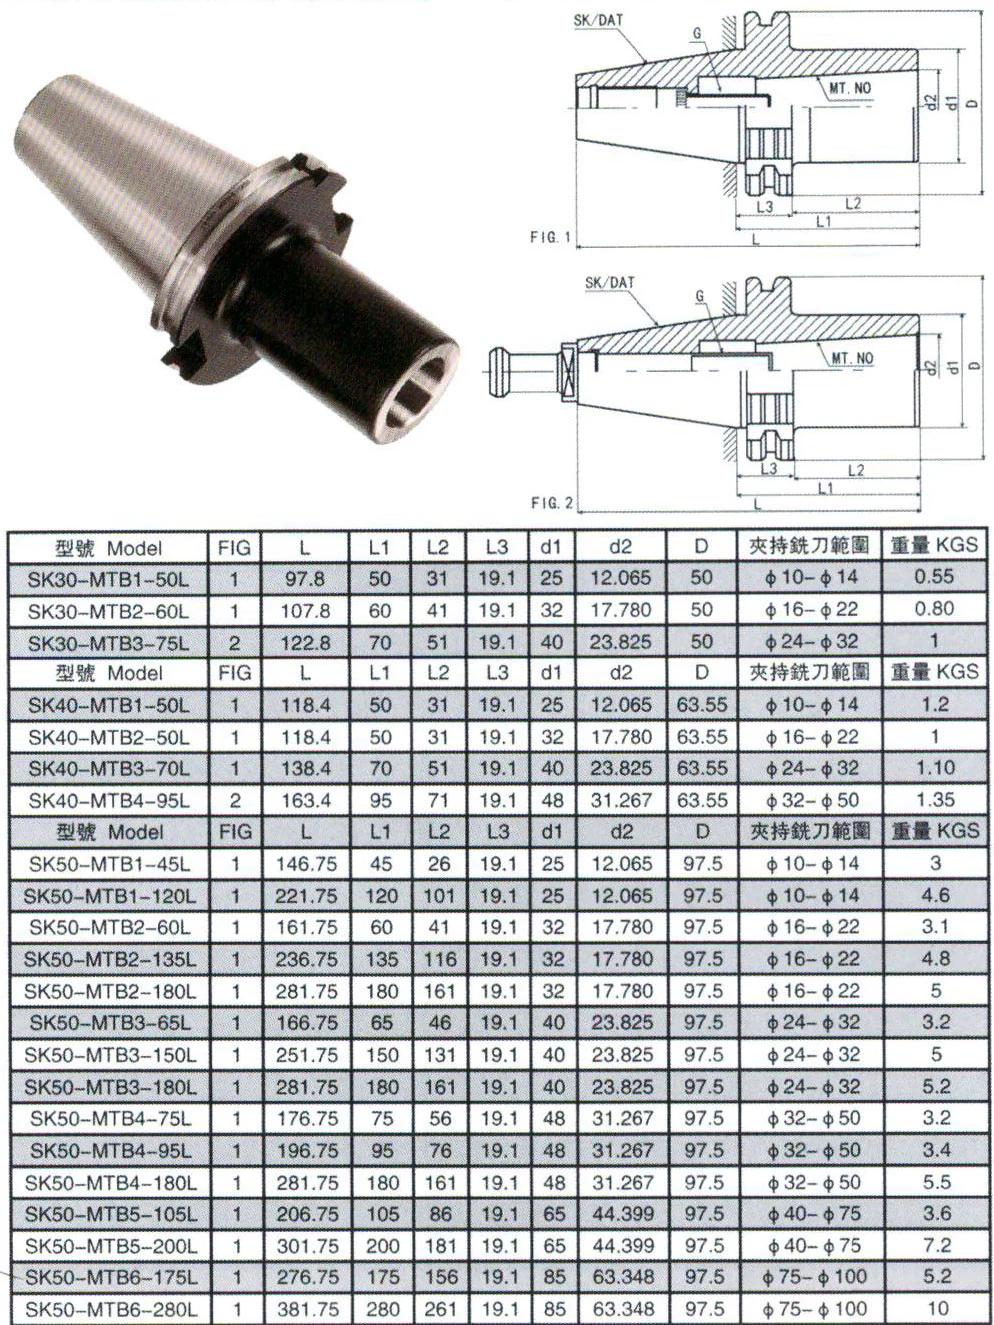 Bt/DIN2080/Jt/Sk/Dat/Cat Tool Holders, Sk30-MTB Morse Taper Adapter for CNC